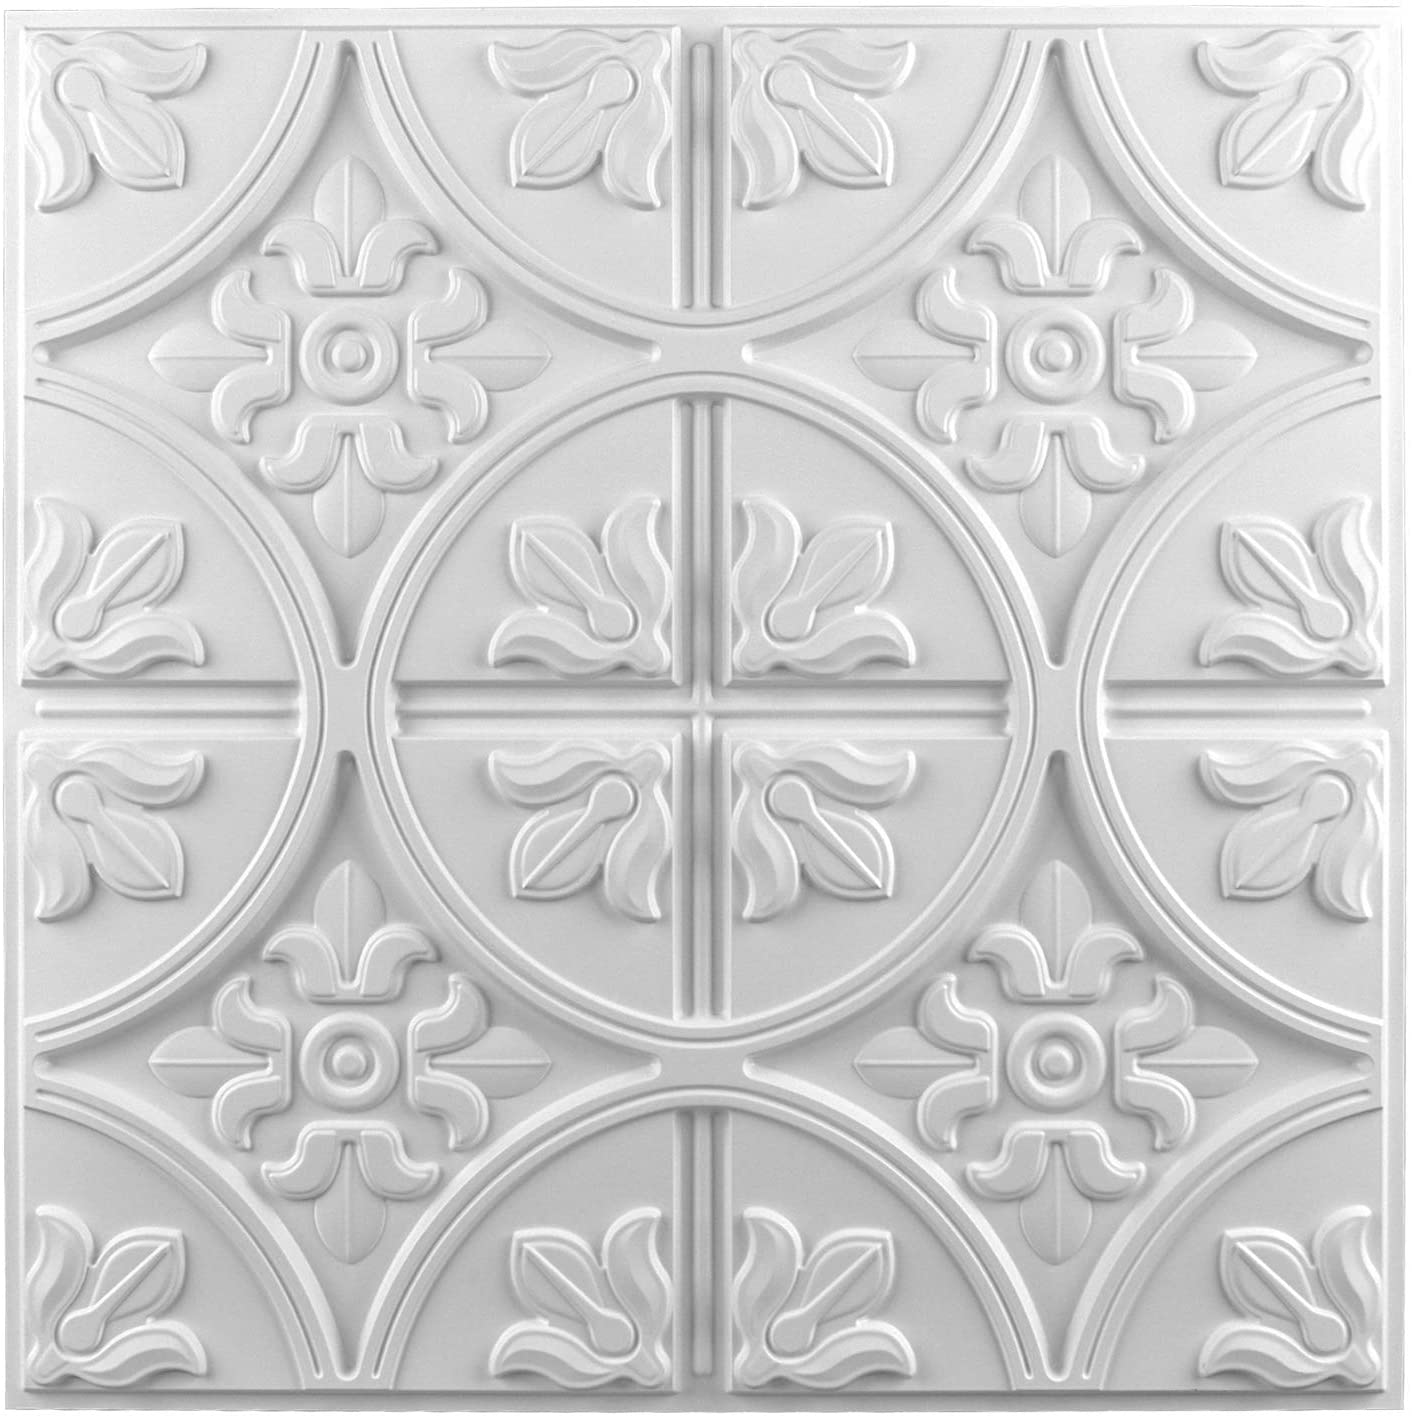 Art3d Decorative Drop Ceiling Tile 2x2 Pack of 12pcs, Glue up Ceiling Panel Square Relief in Matt White